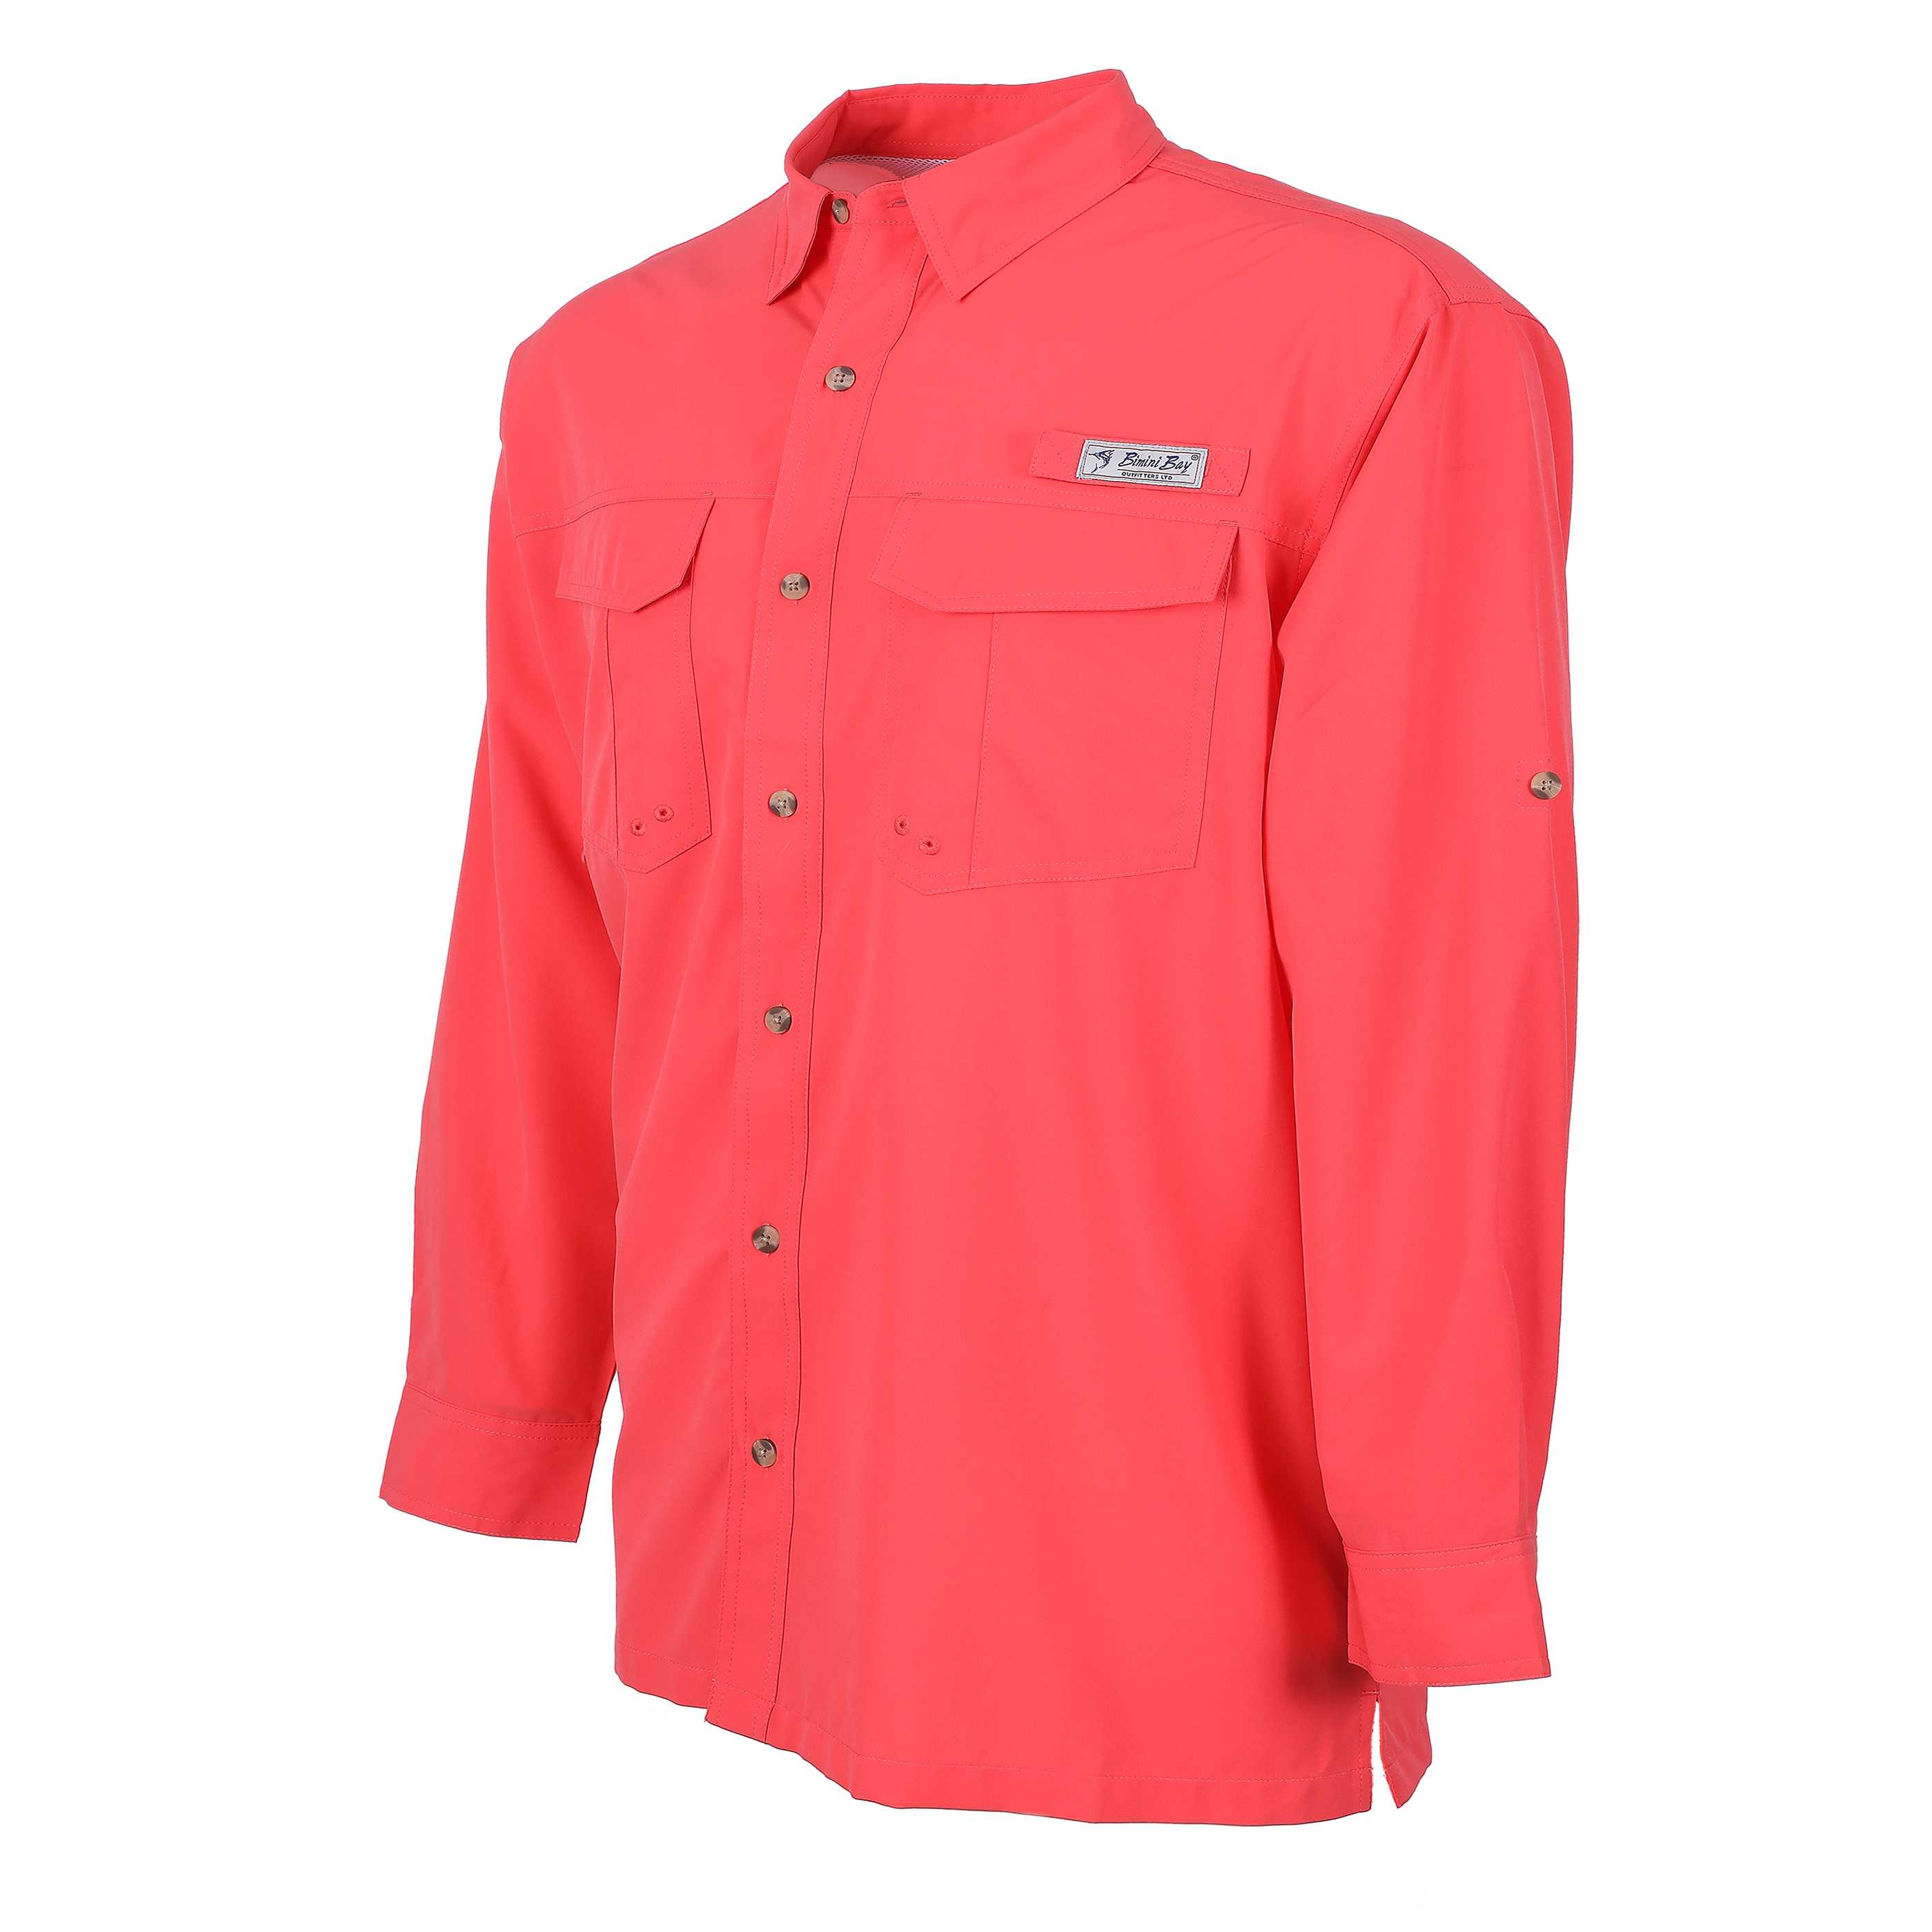 Bimini Bay Outfitters LTD Hook M' Men's Long Sleeve Shirt (XL, Sailfish 2  Scuba Blue) : : Clothing, Shoes & Accessories